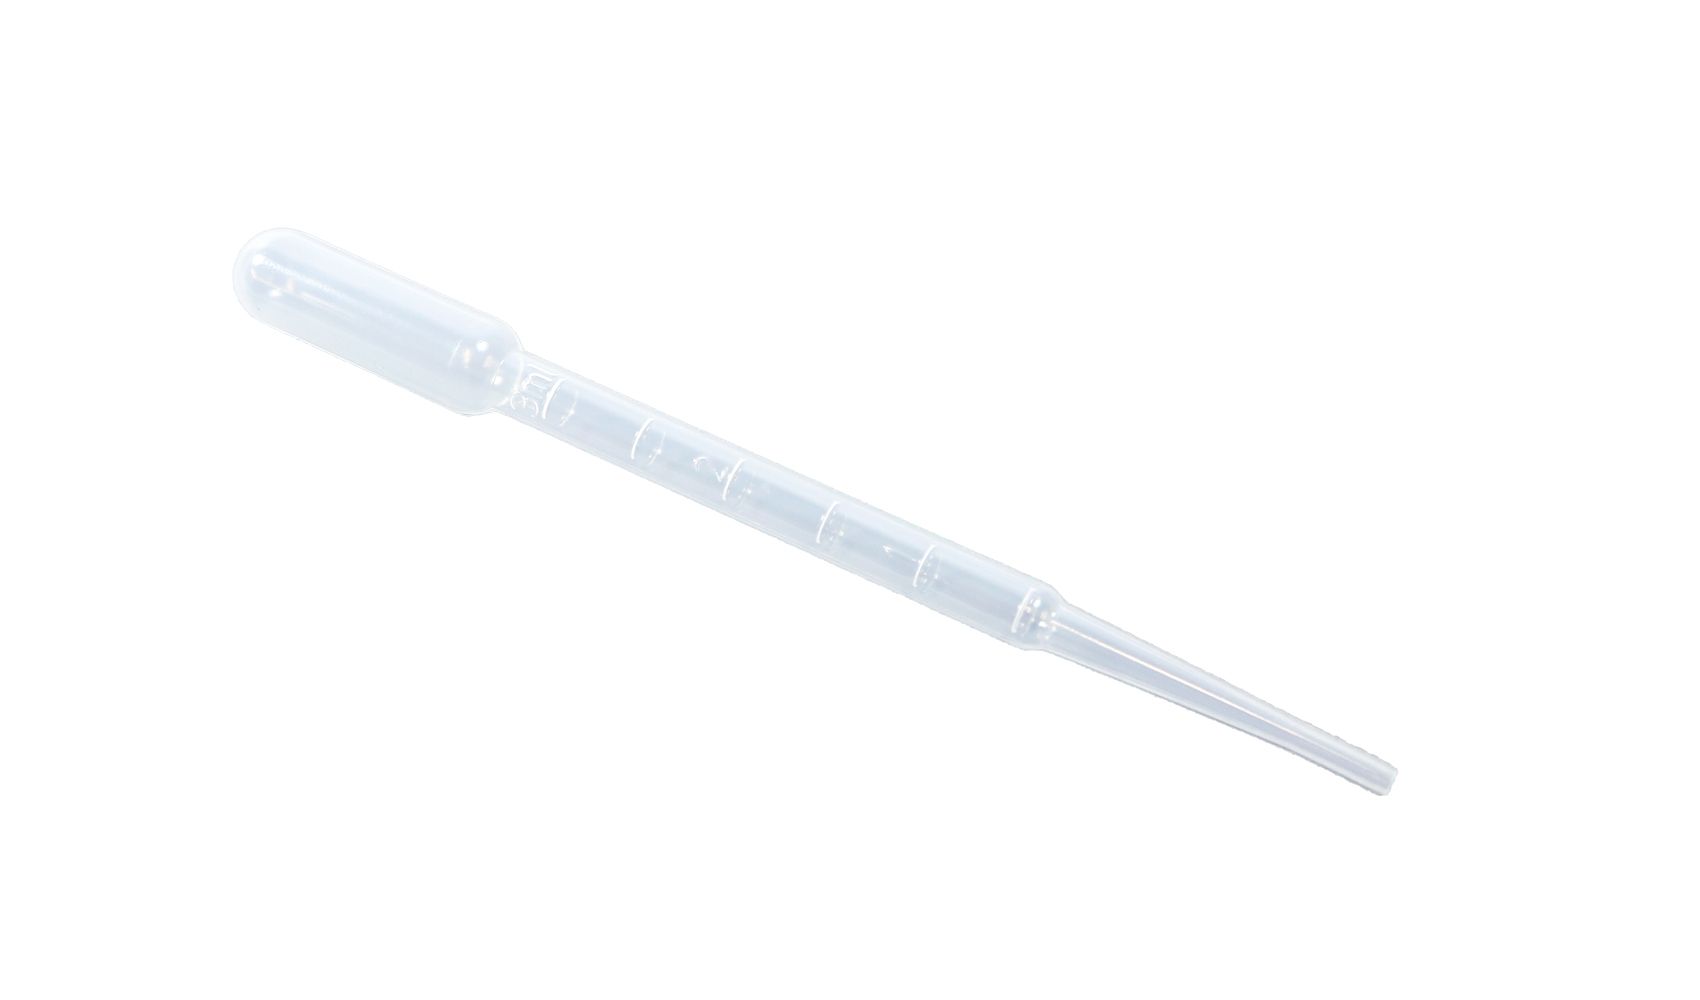 Pasteur pipette, length: 158 mm | Minitube